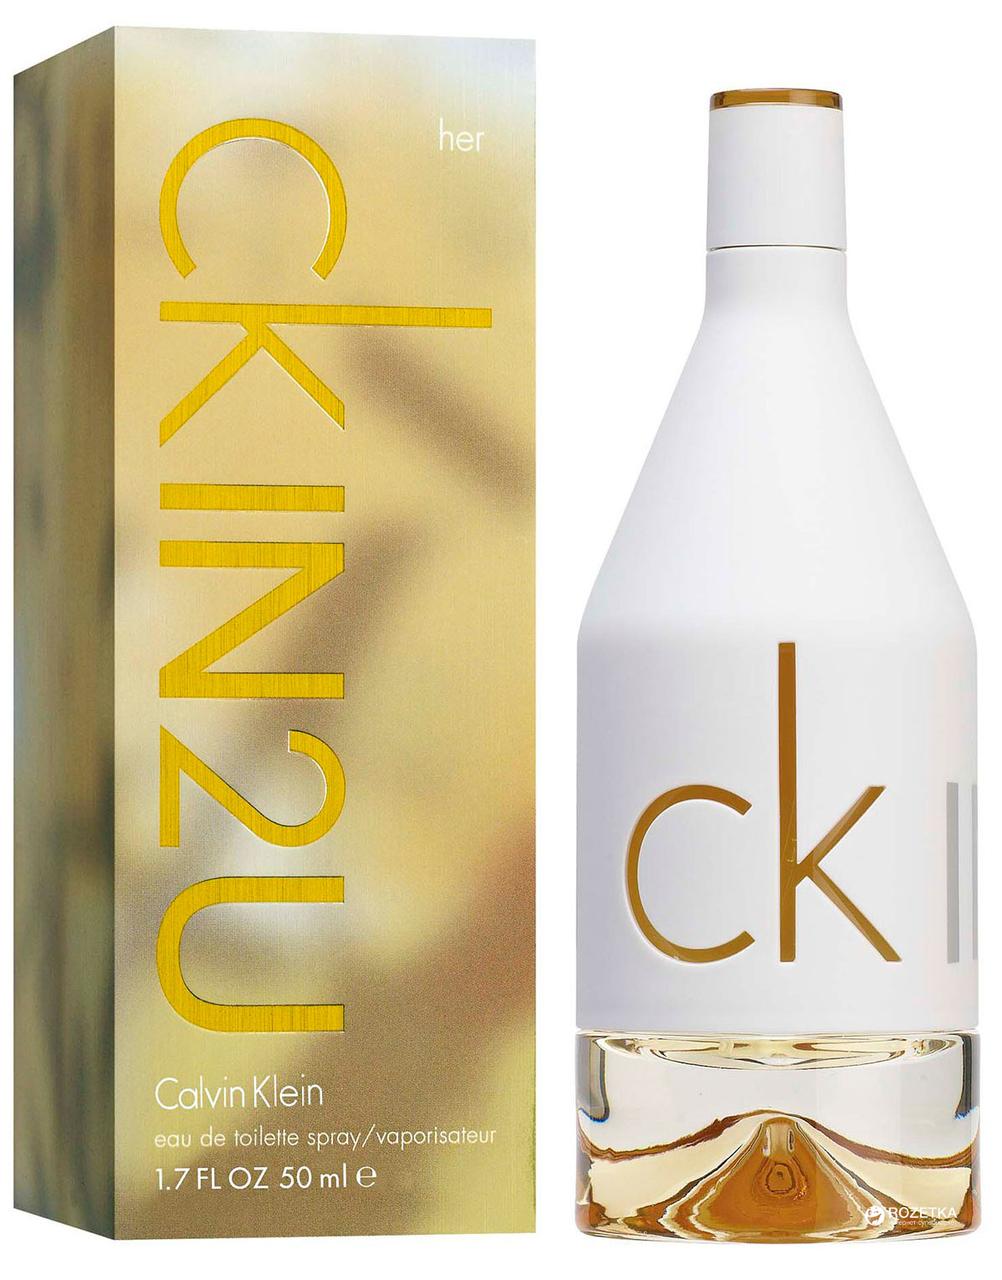 Calvin Klein CK IN2U For Her Туалетна вода 100 ml (Кельвін Кляйн ИН2Ю) Жіночий Парфум